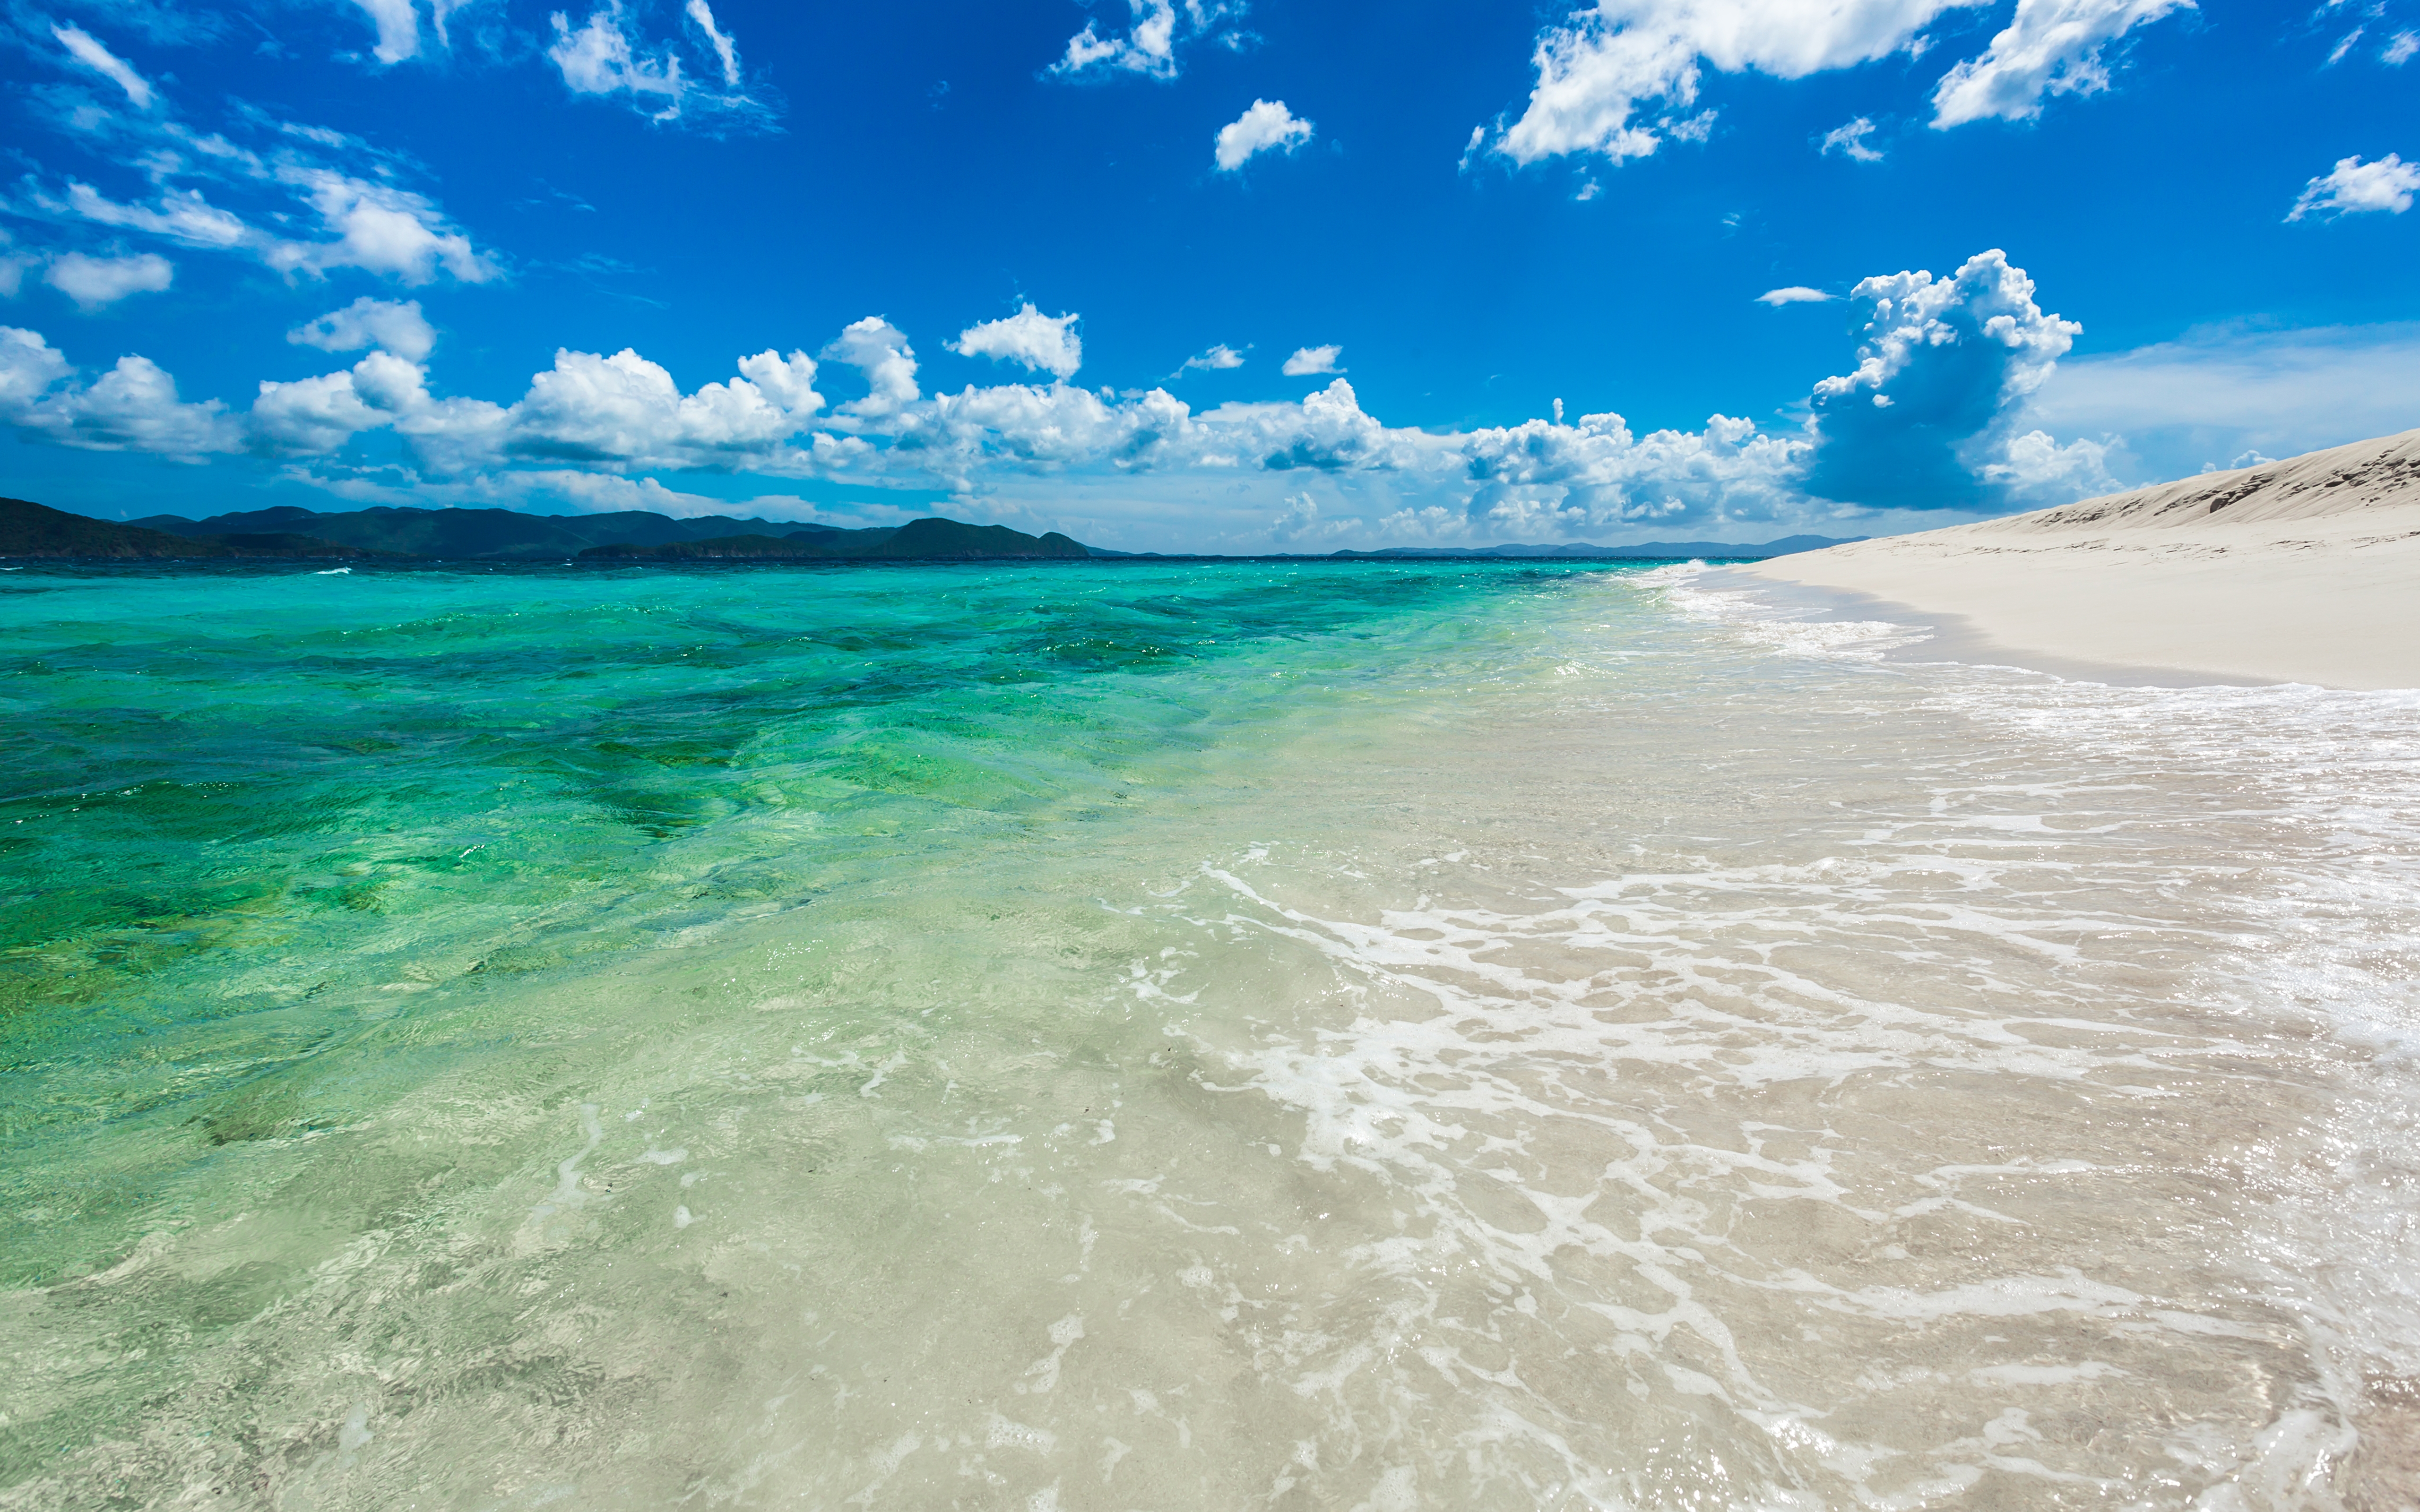 HD wallpaper, Caribbean Sea, Horizon, Clear Water, Seascape, 5K, British Virgin Islands, Blue Sky, Tropical Beach, Sandy Cay Island, Clouds, Landscape